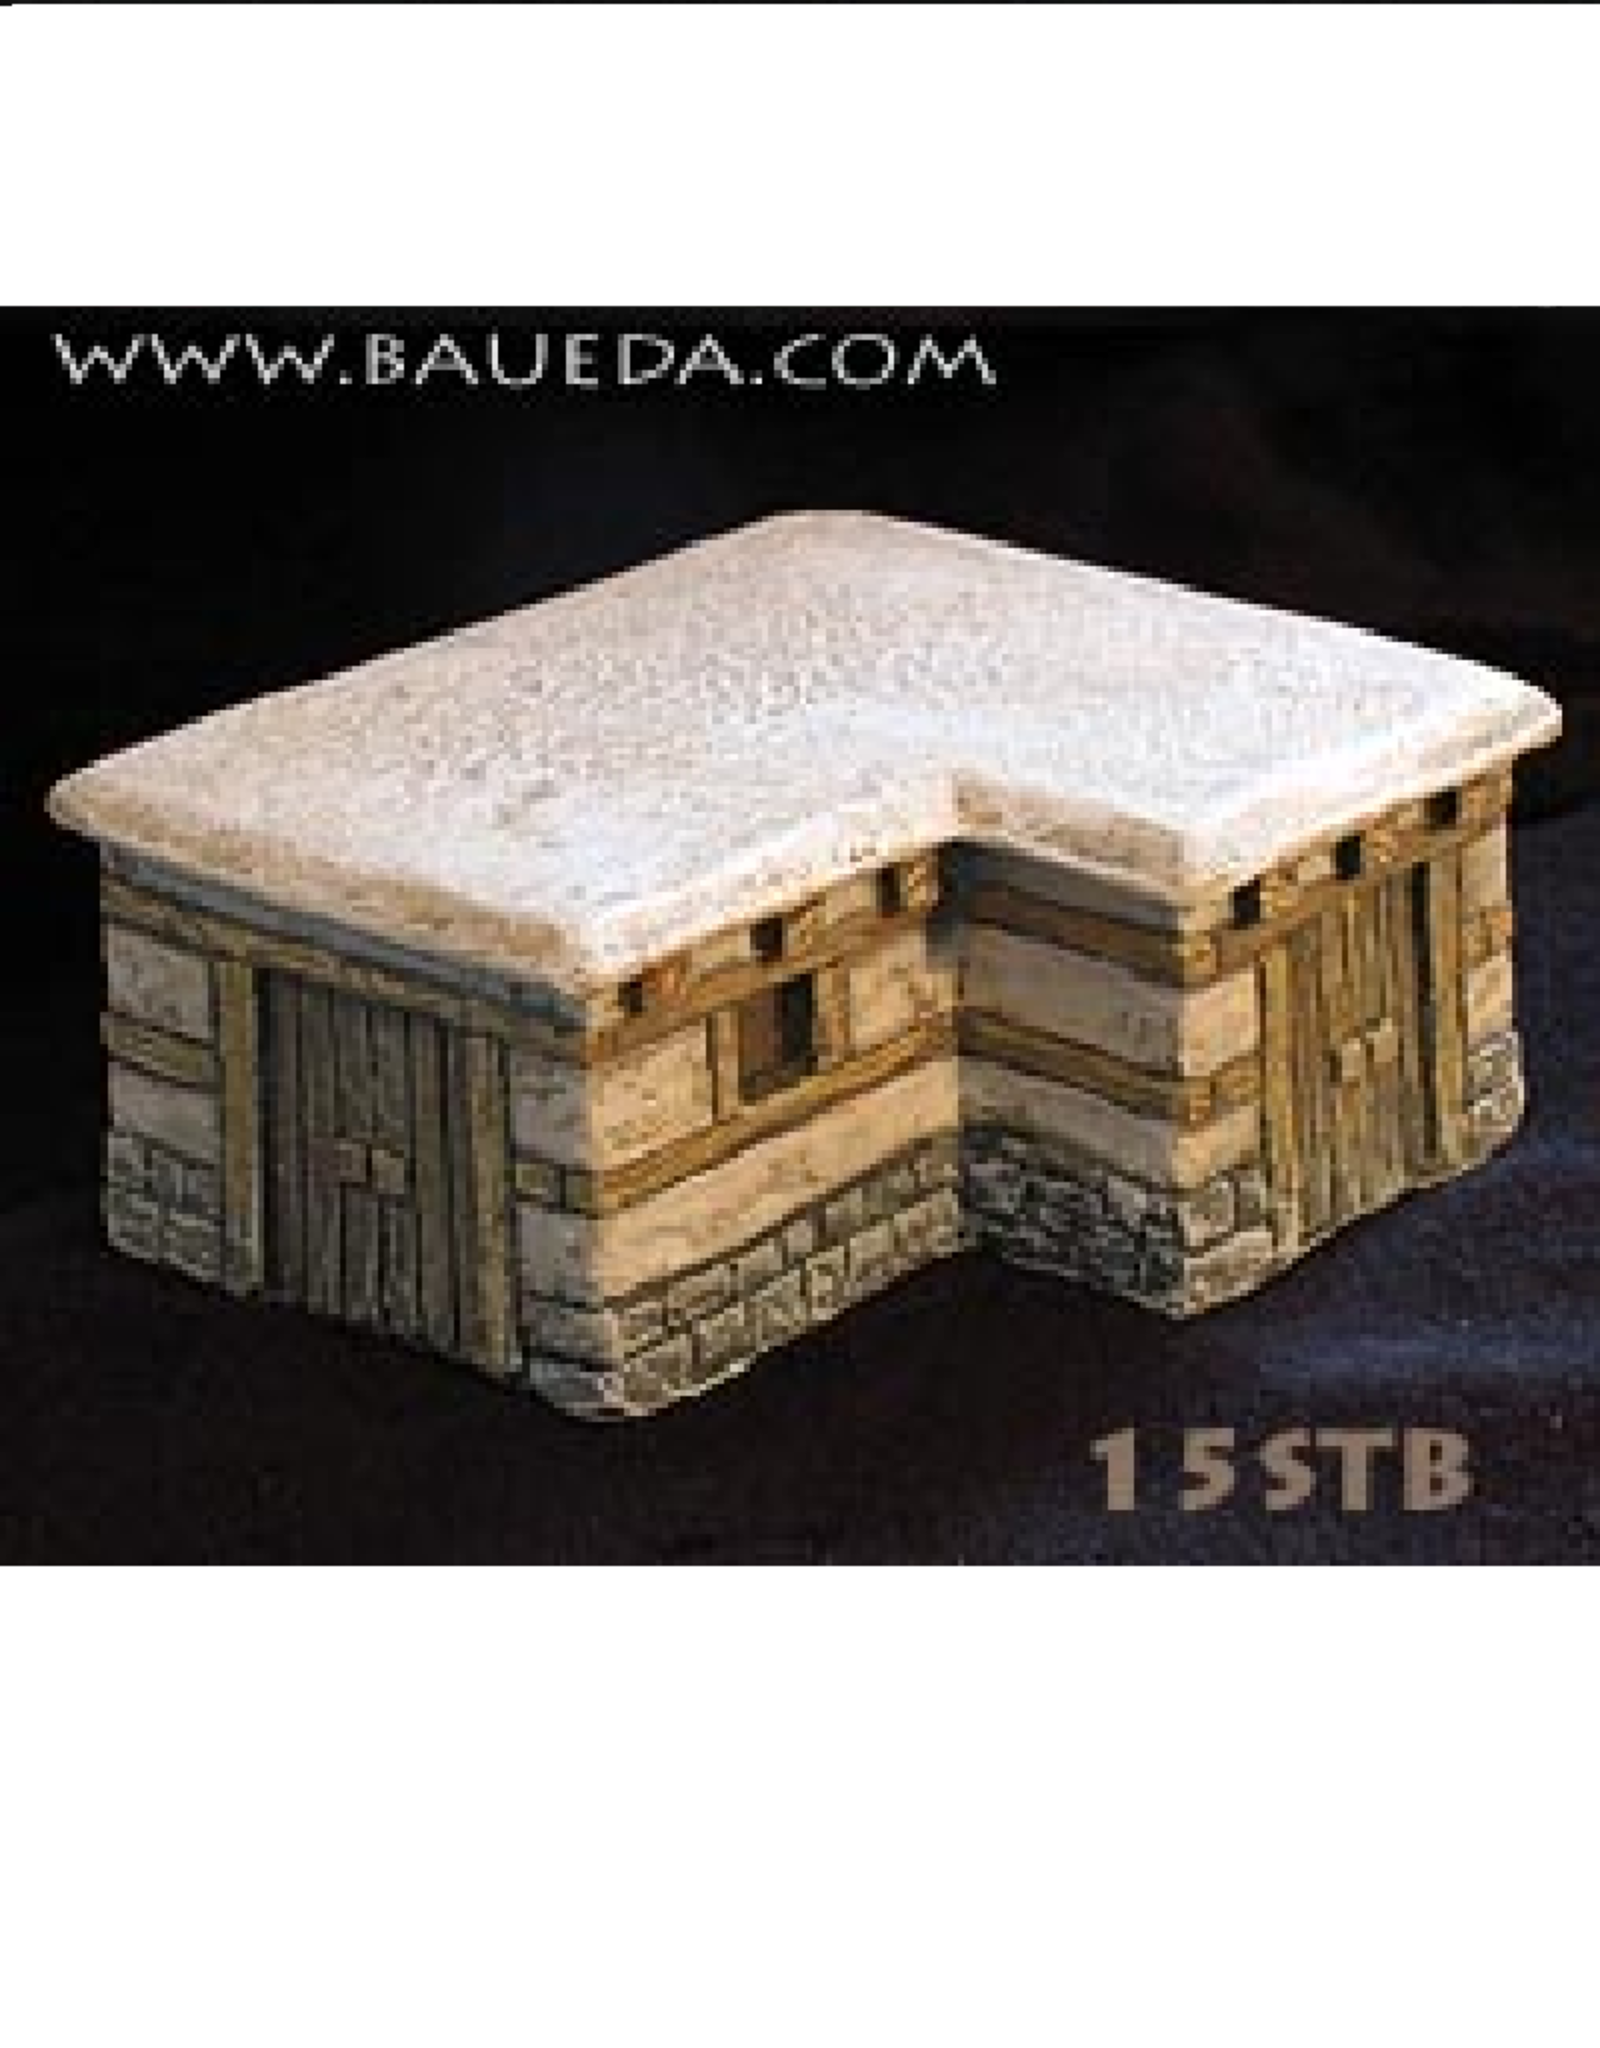 Baueda Bronze Age stable